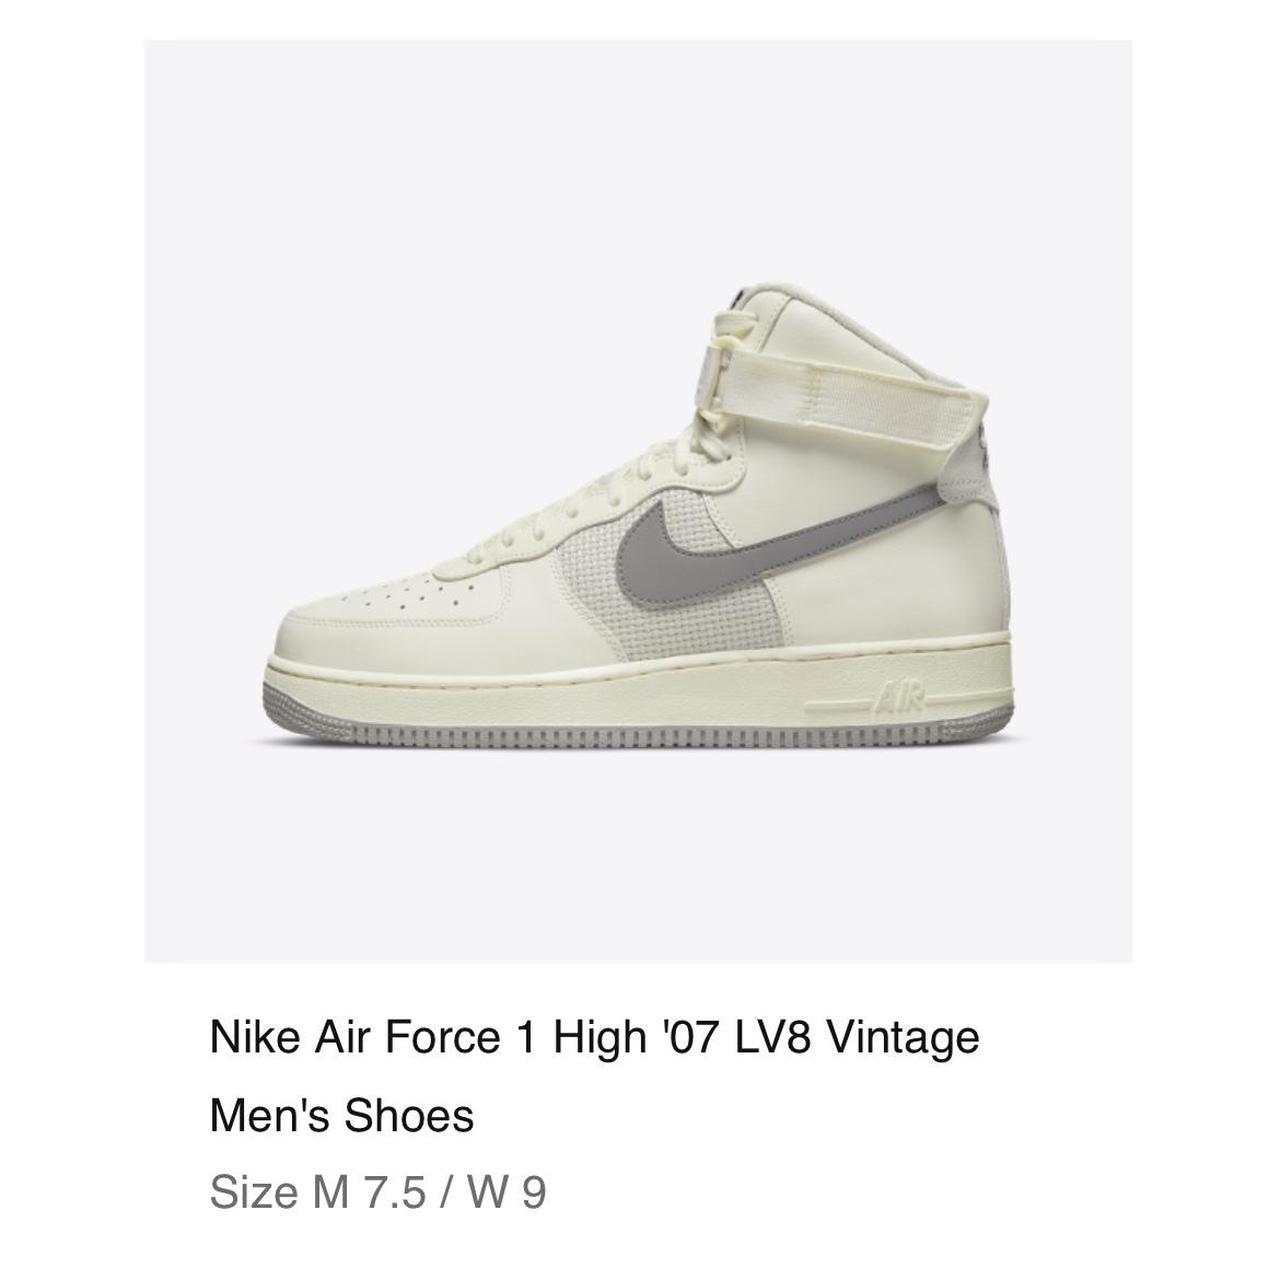 Nike Air Force 1 High '07 LV8 Vintage